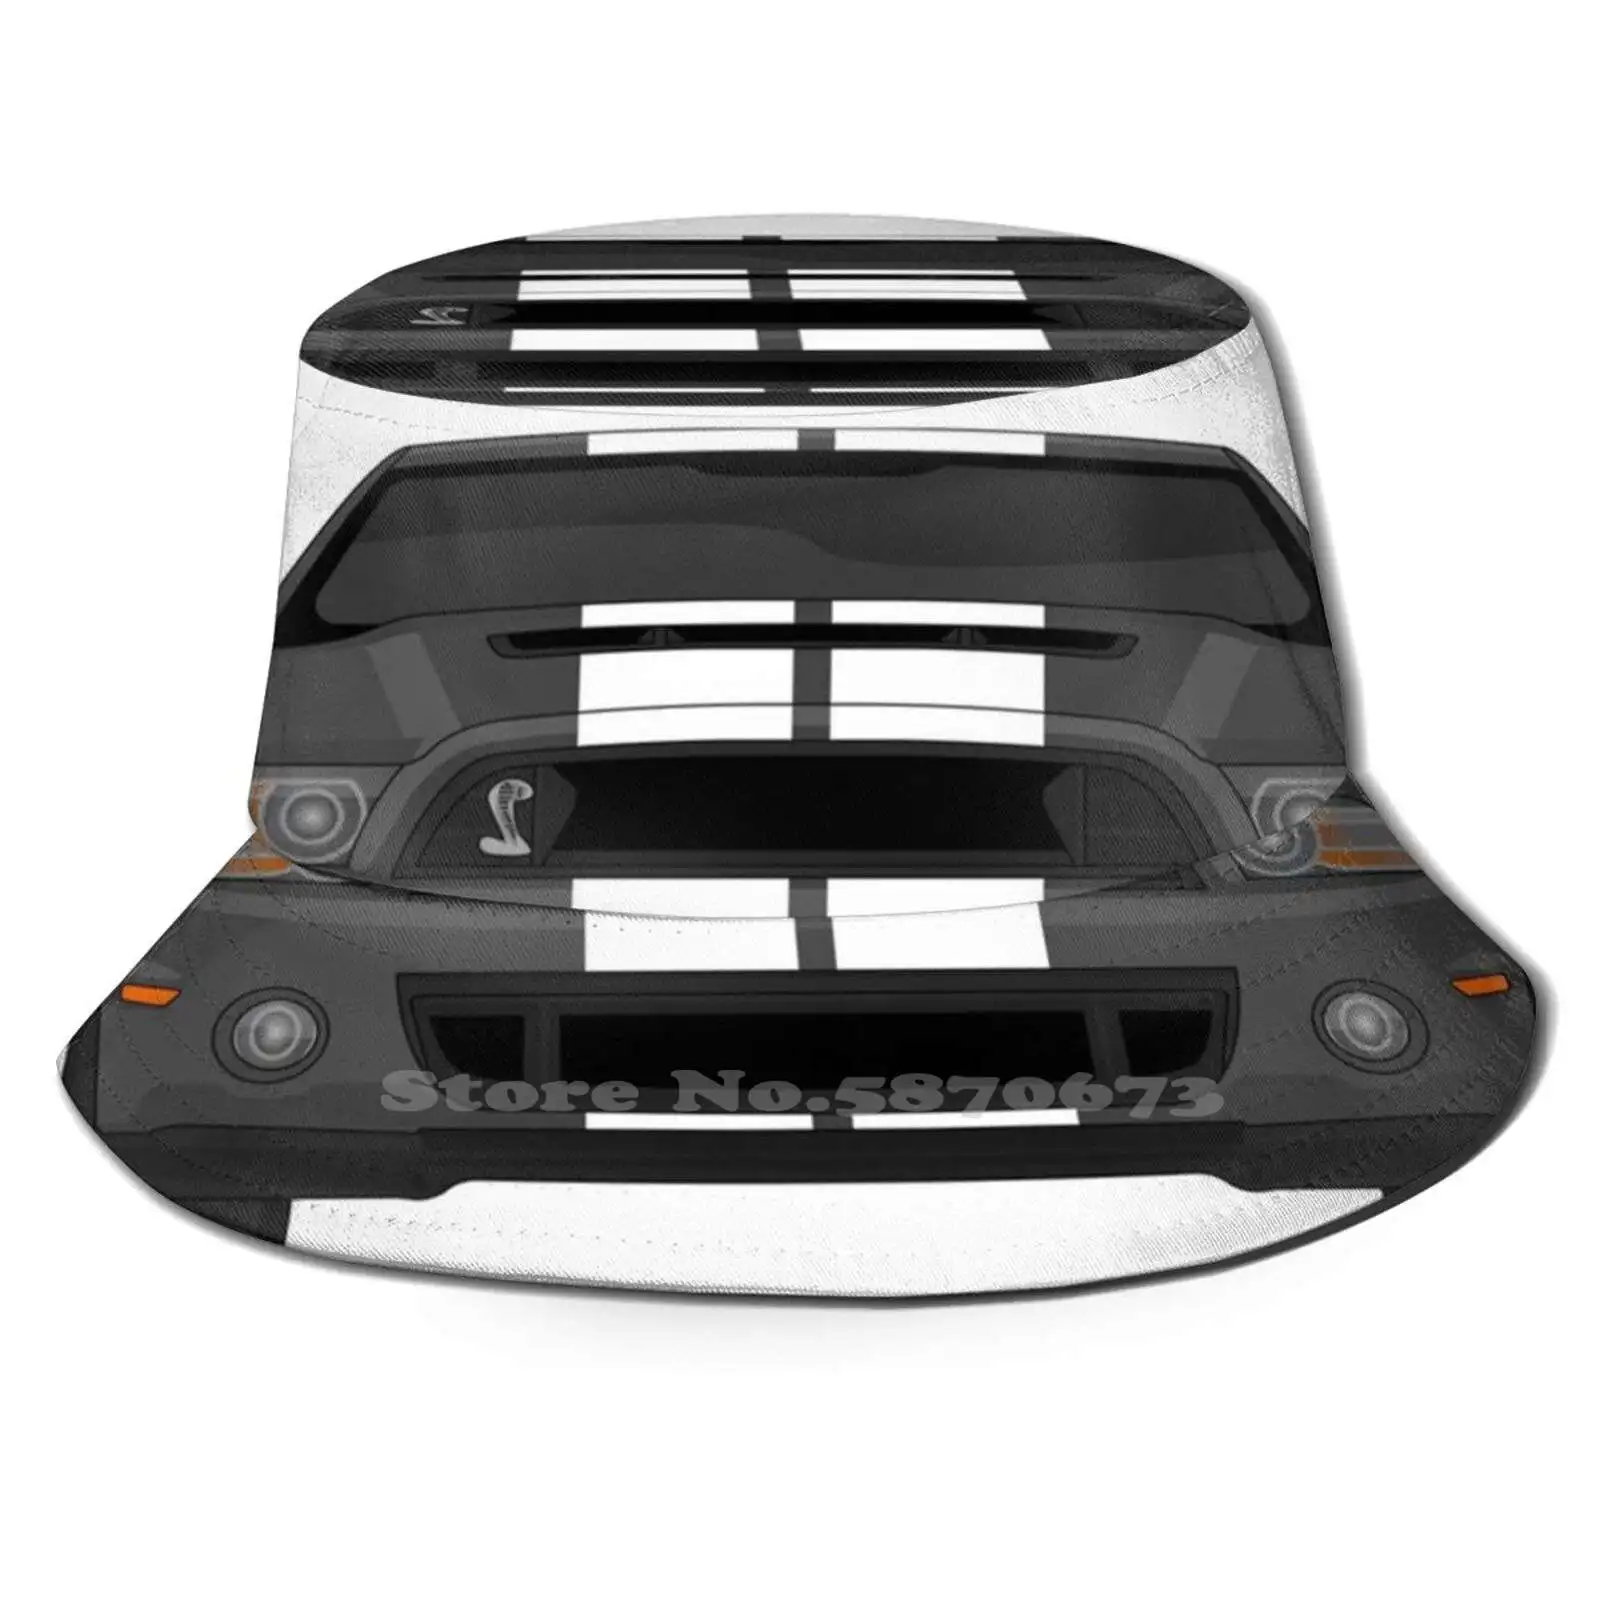 

Shelby Gt500 (темно-серый) шапки унисекс для рыбаков Gt500 Shelby Car Gt Американский мышечный автомобиль Gt350 автомобильный